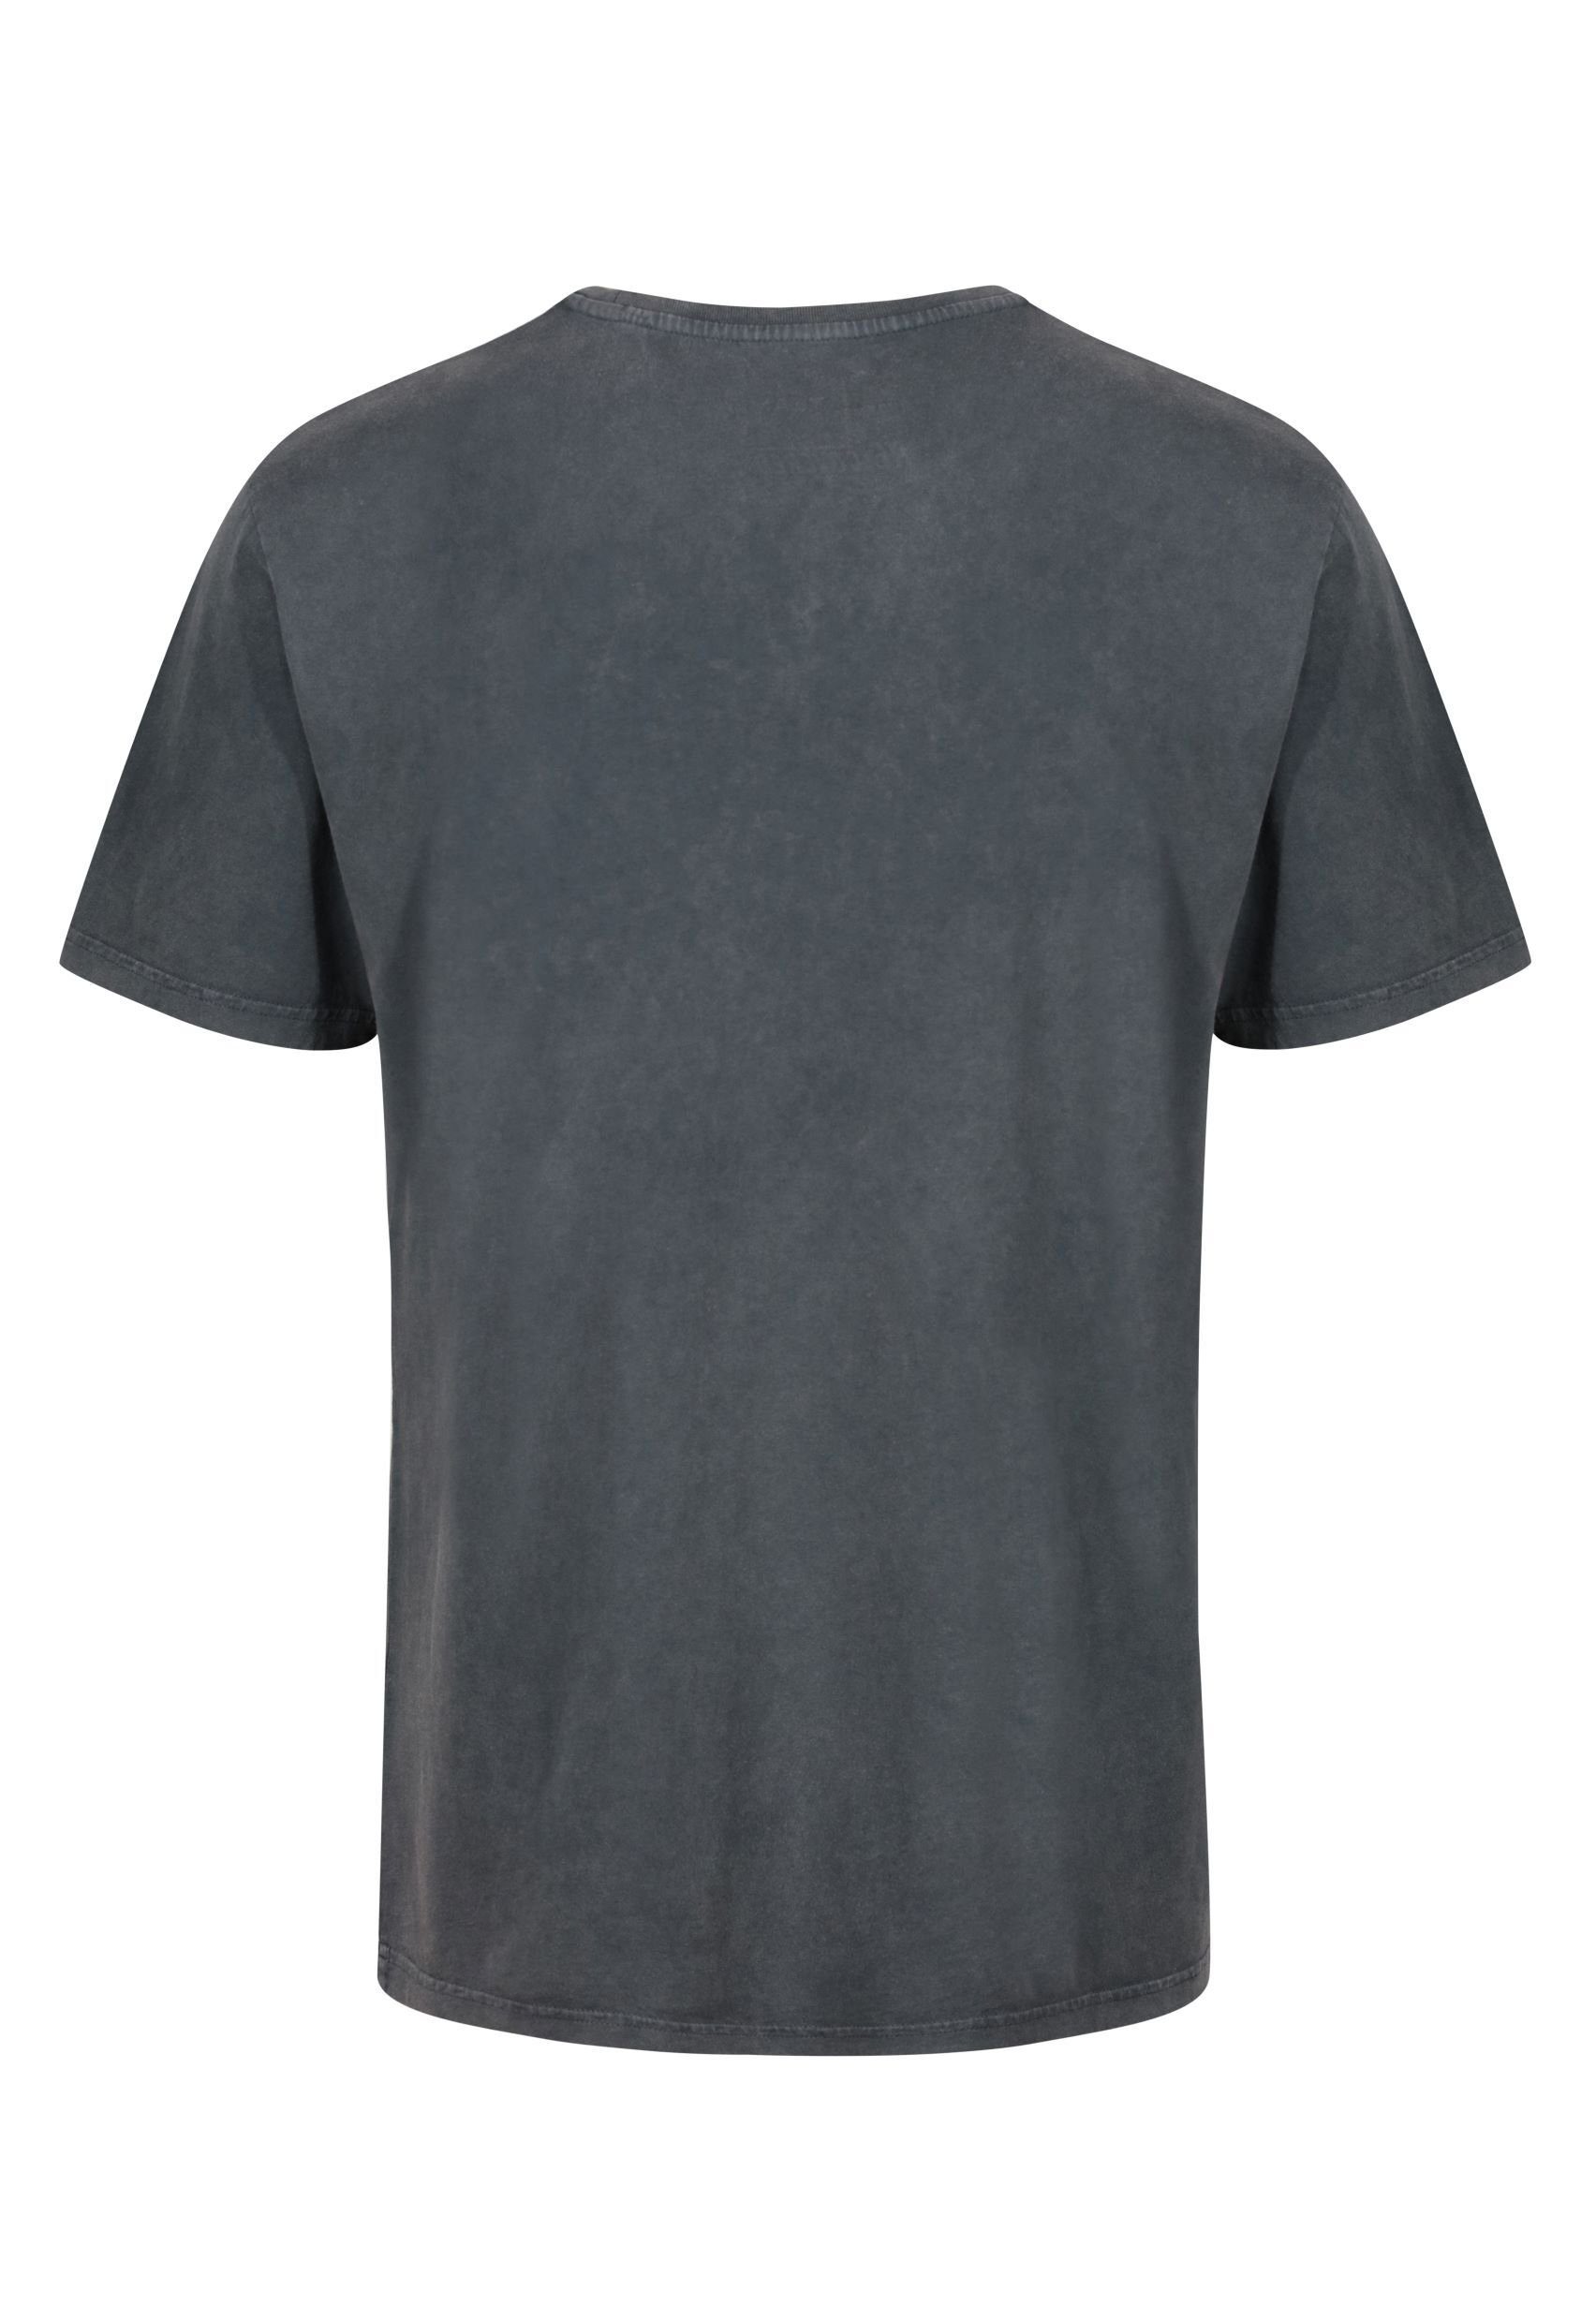 NFL zertifizierte RAIDERS MONOCHROME GOTS T-Shirt Bio-Baumwolle Recovered